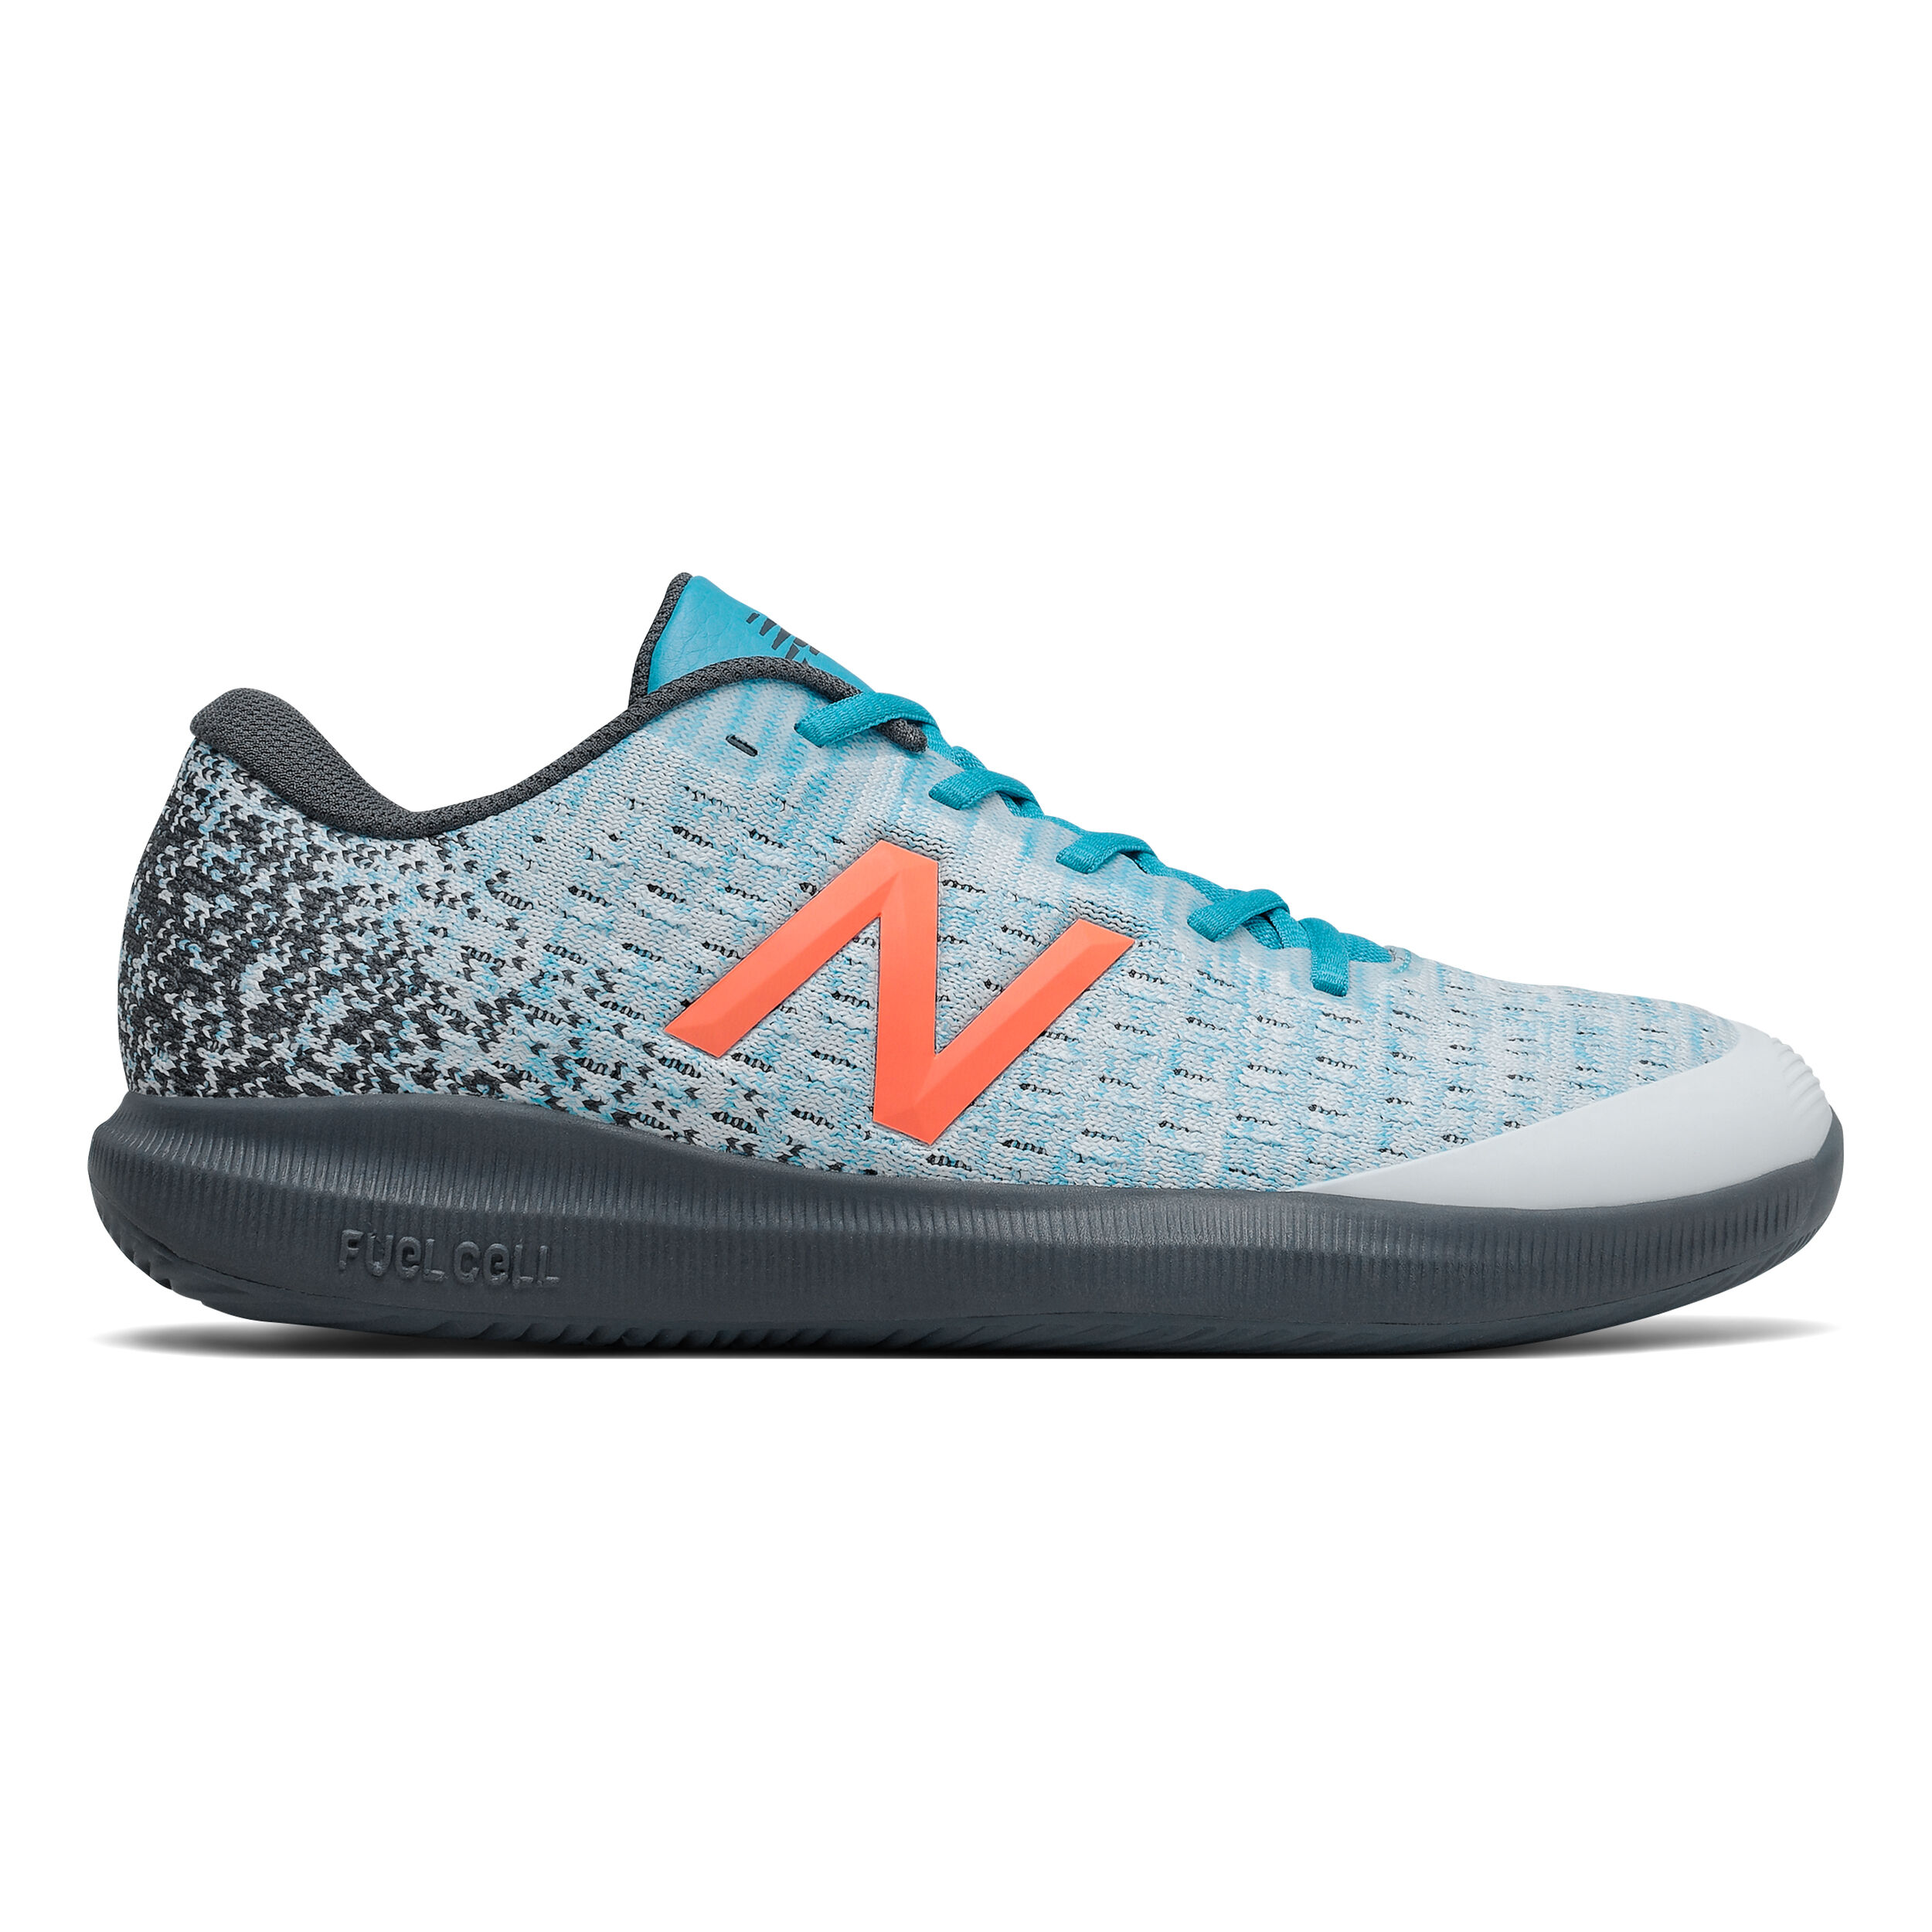 Chaussures de tennis de New Balance acheter en ligne | Tennis-Point